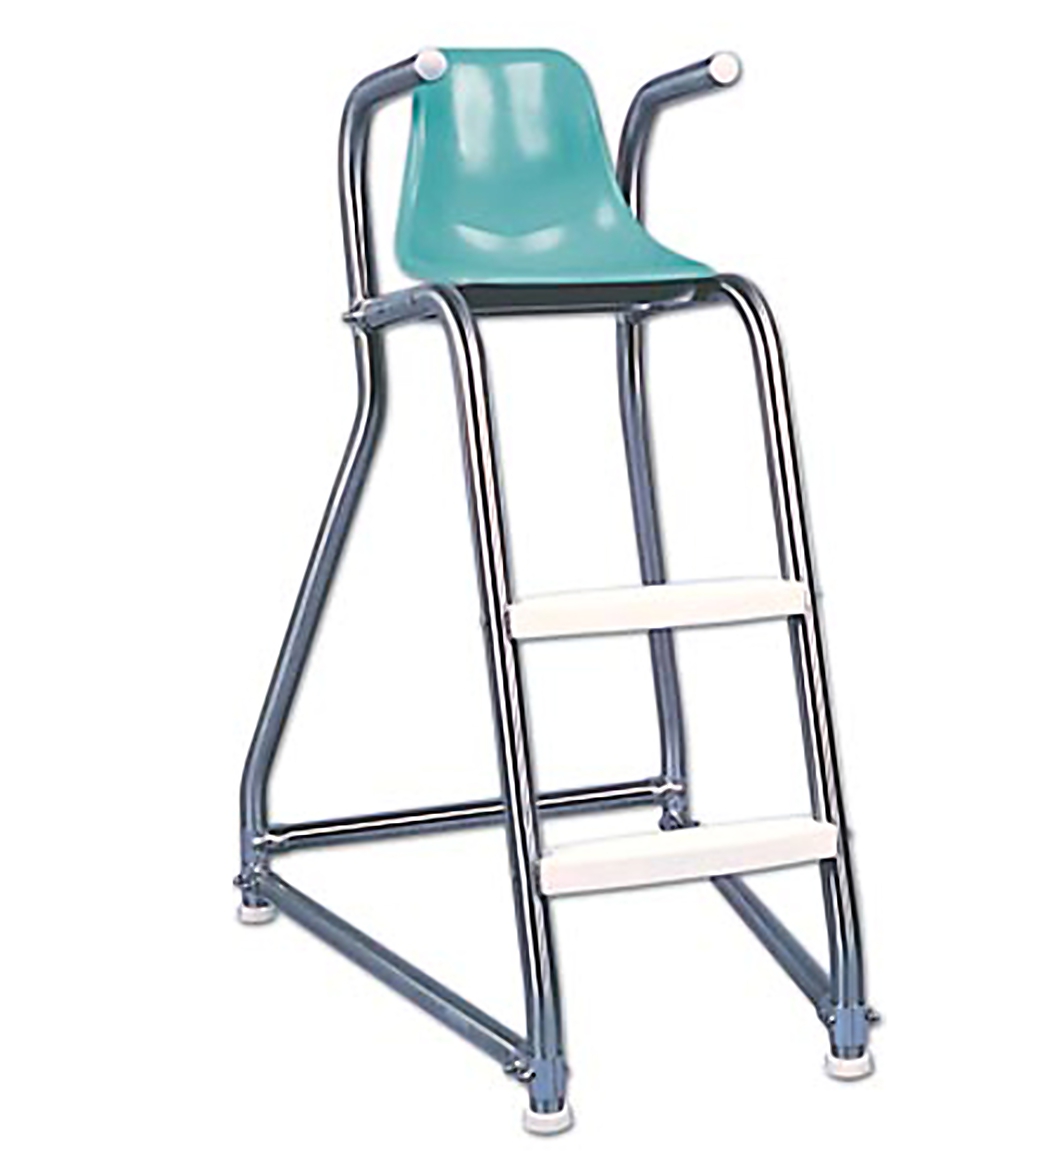 Paragon 3'10" Portable Lifeguard Chair at